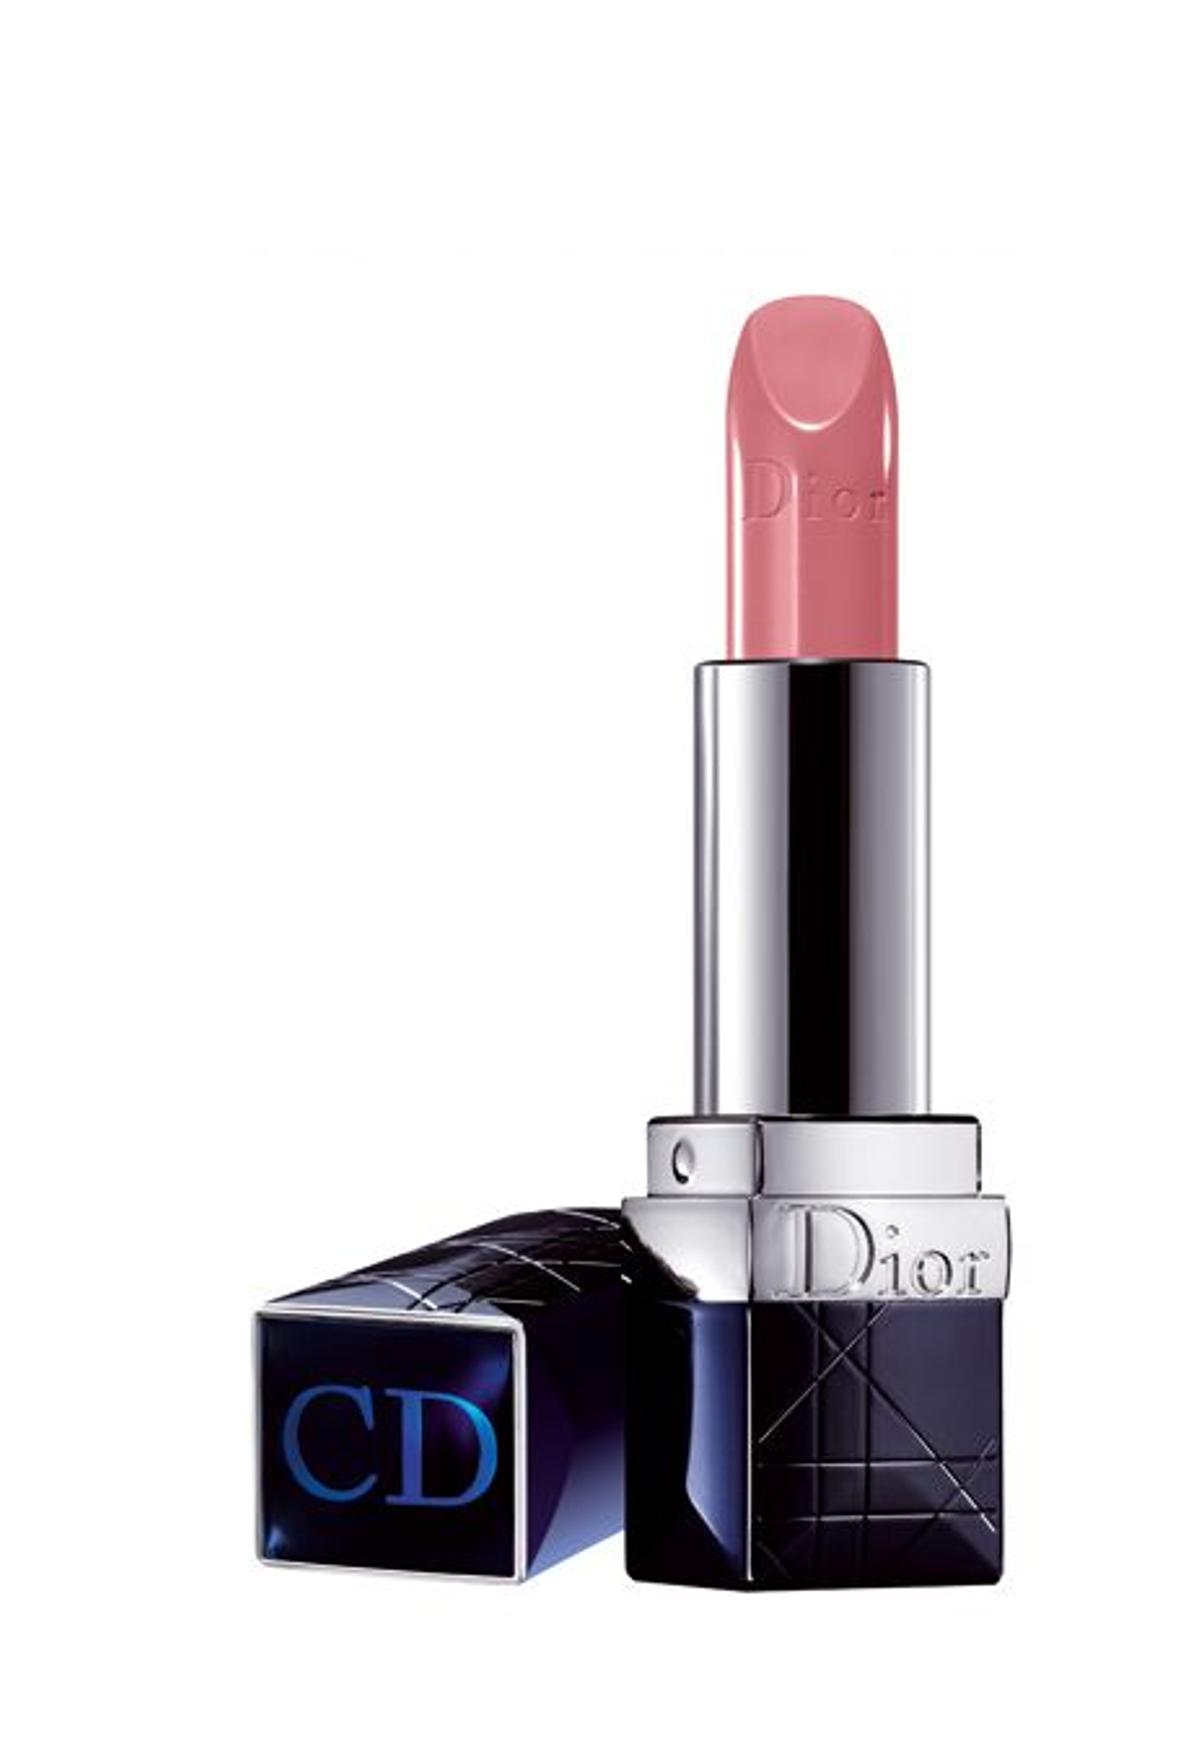 Rouge Dior Nude Dior (28 €).